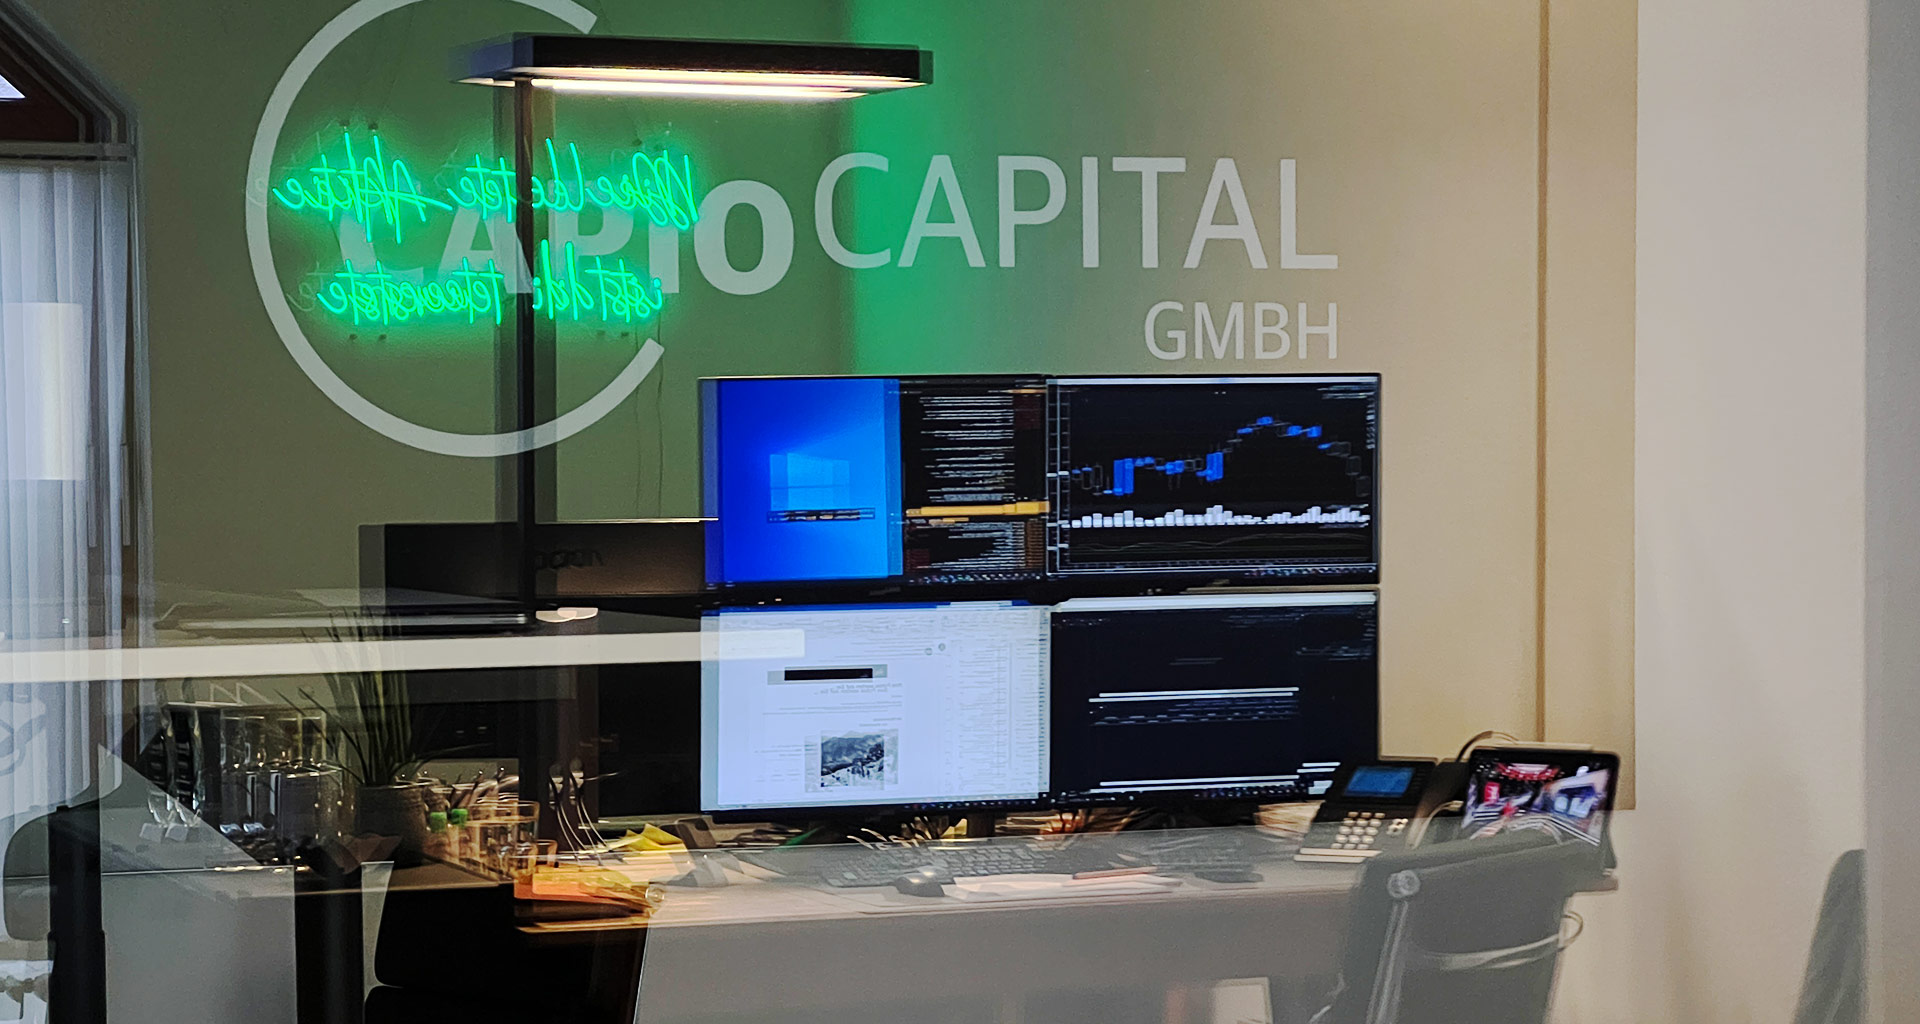 Capio-Capital-GmbH-Office-Sinzheim-Baden-Baden